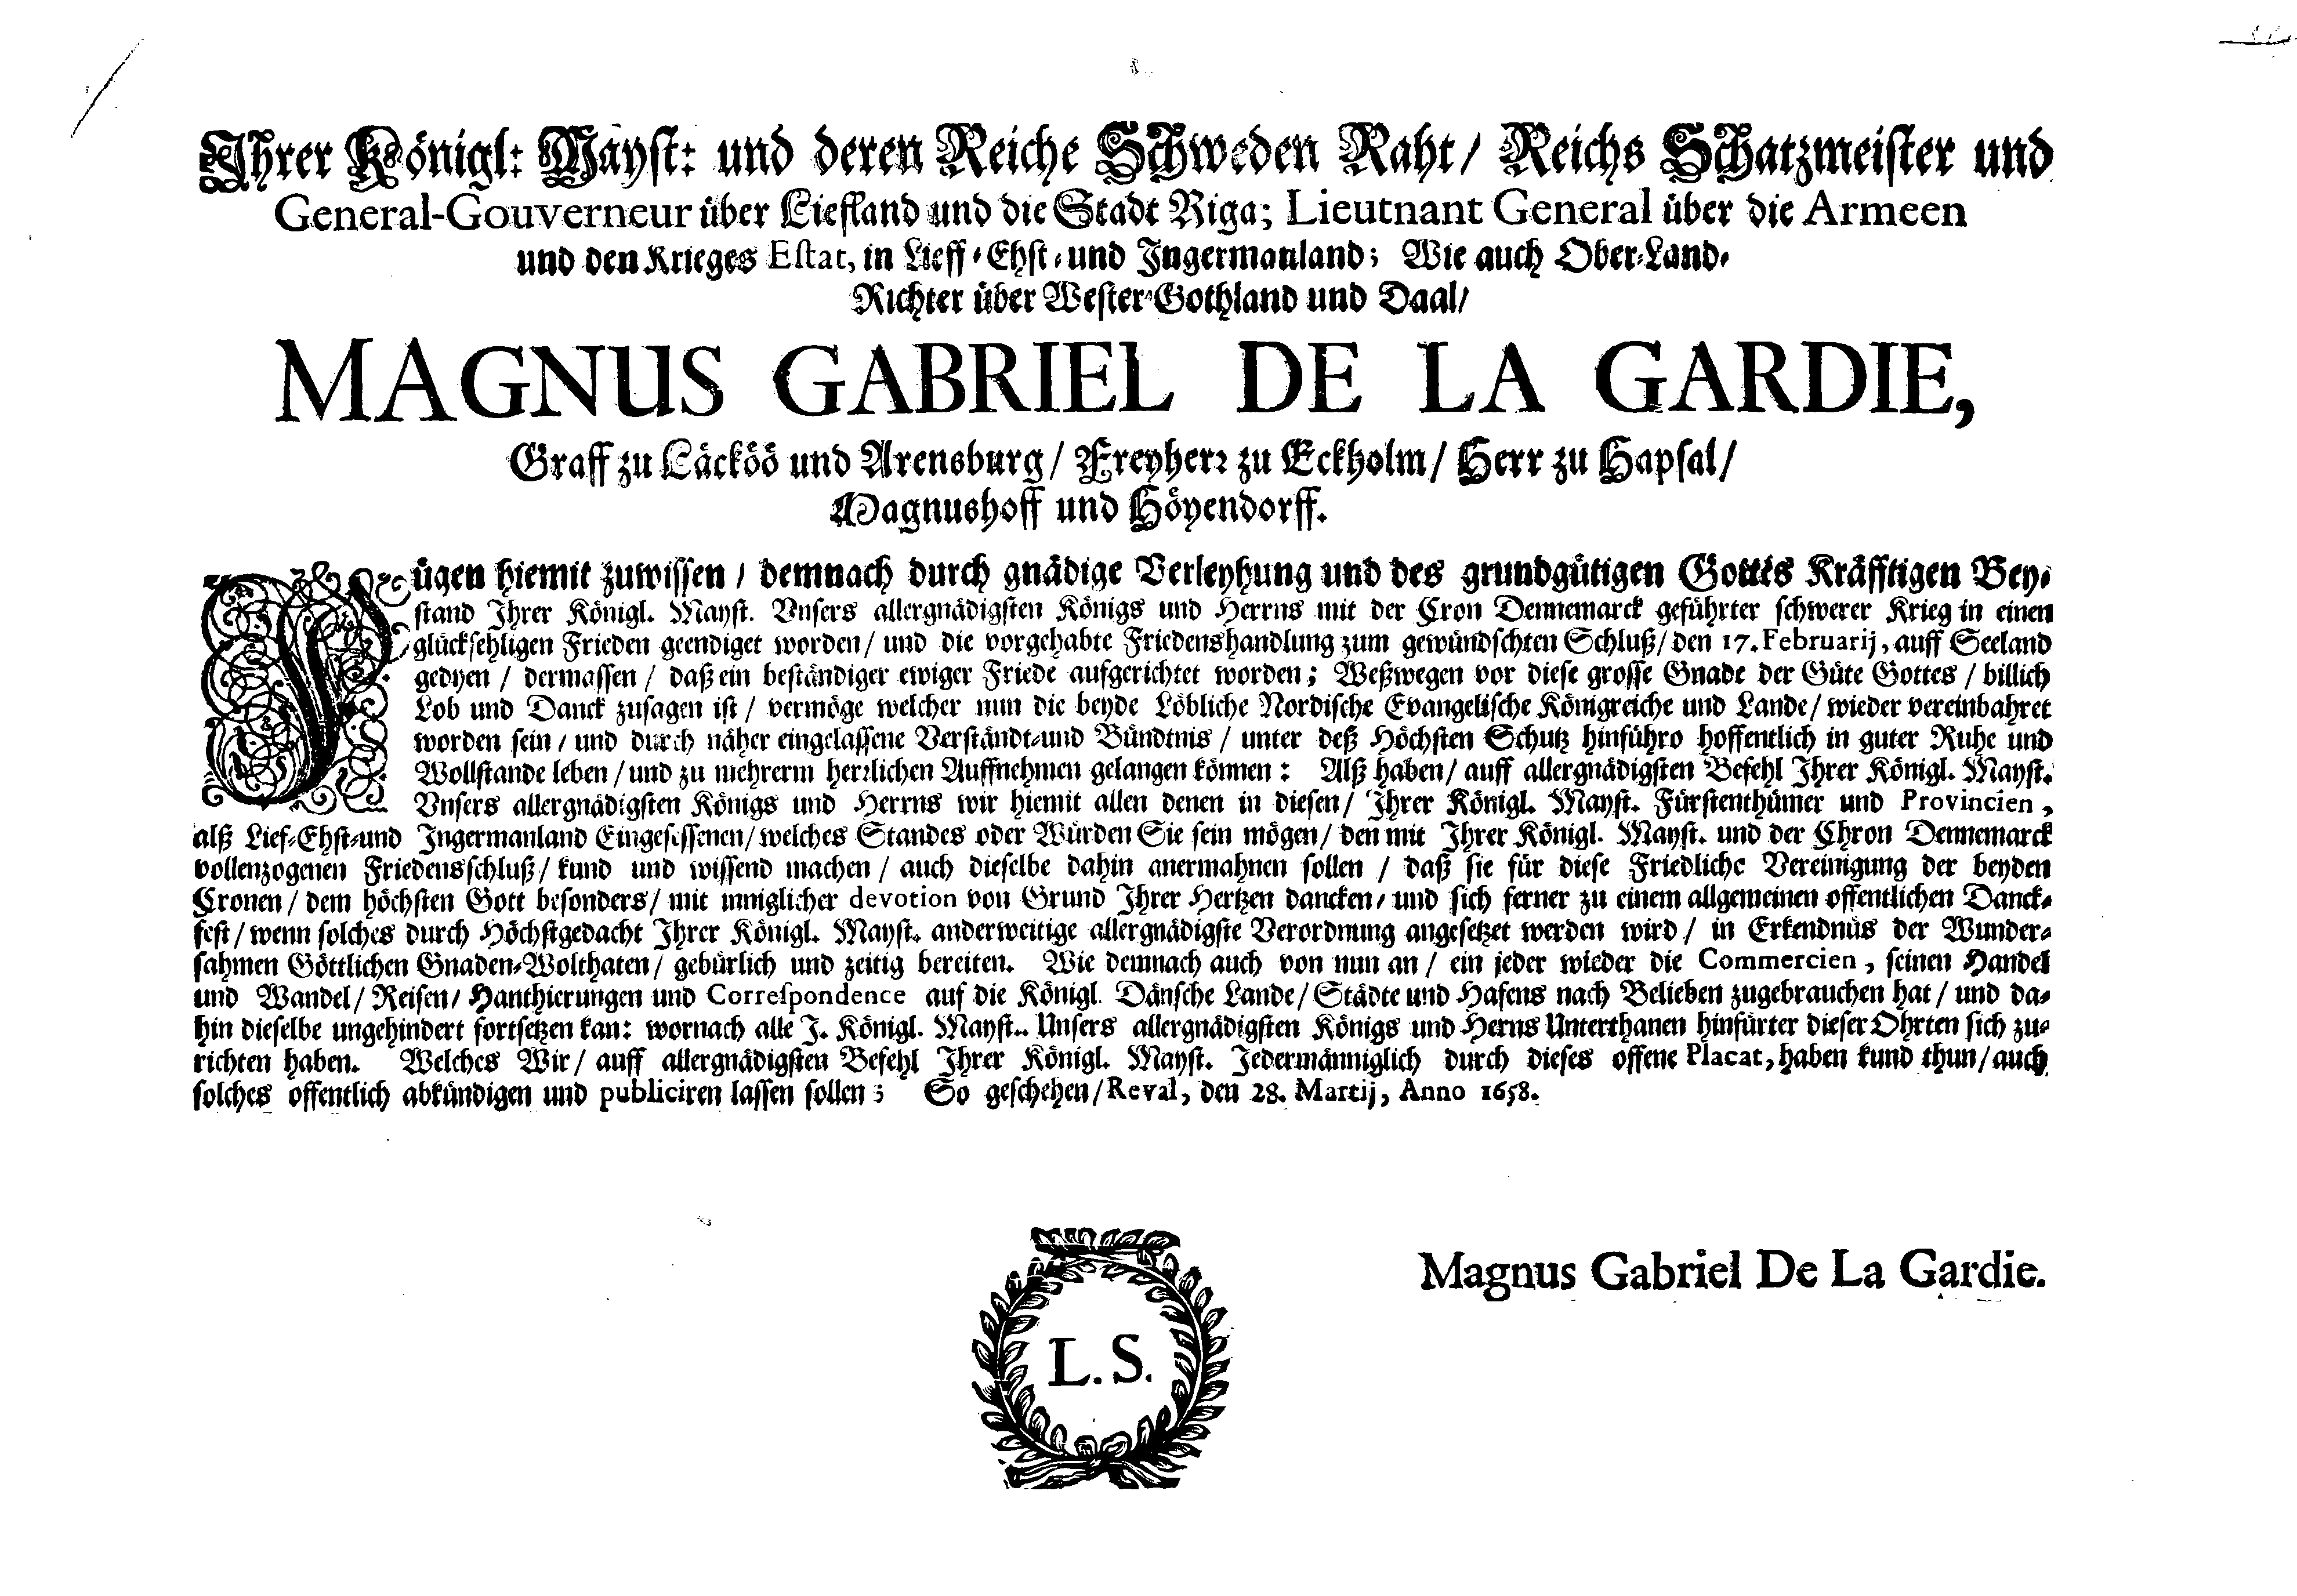 [Magnus Gabriel De la Gardie korraldus]